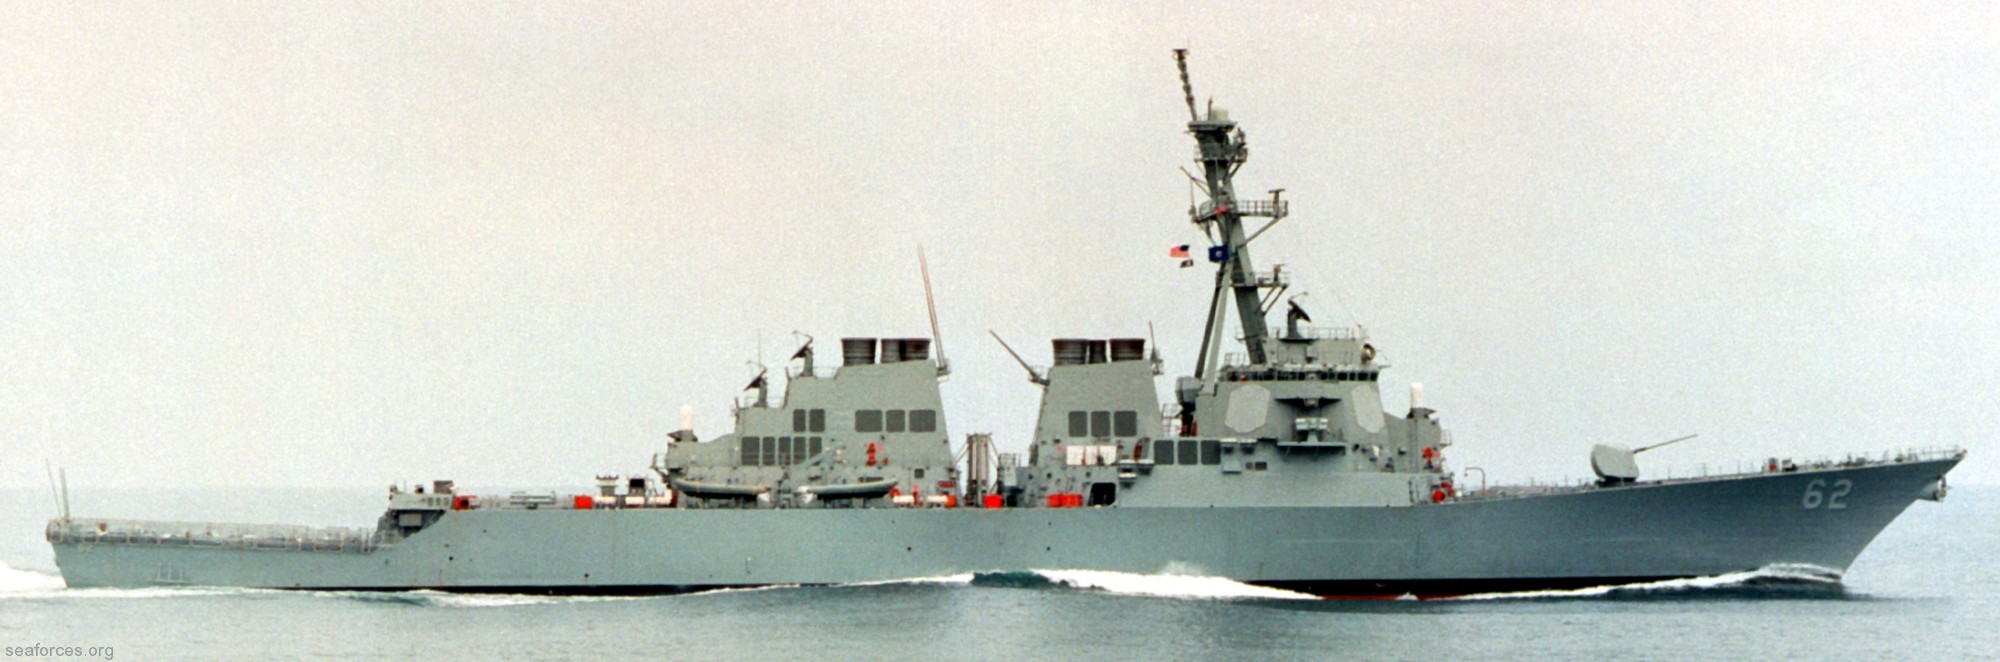 ddg-62 uss fitzgerald guided missile destroyer 1995 104 sea trials bath iron works maine